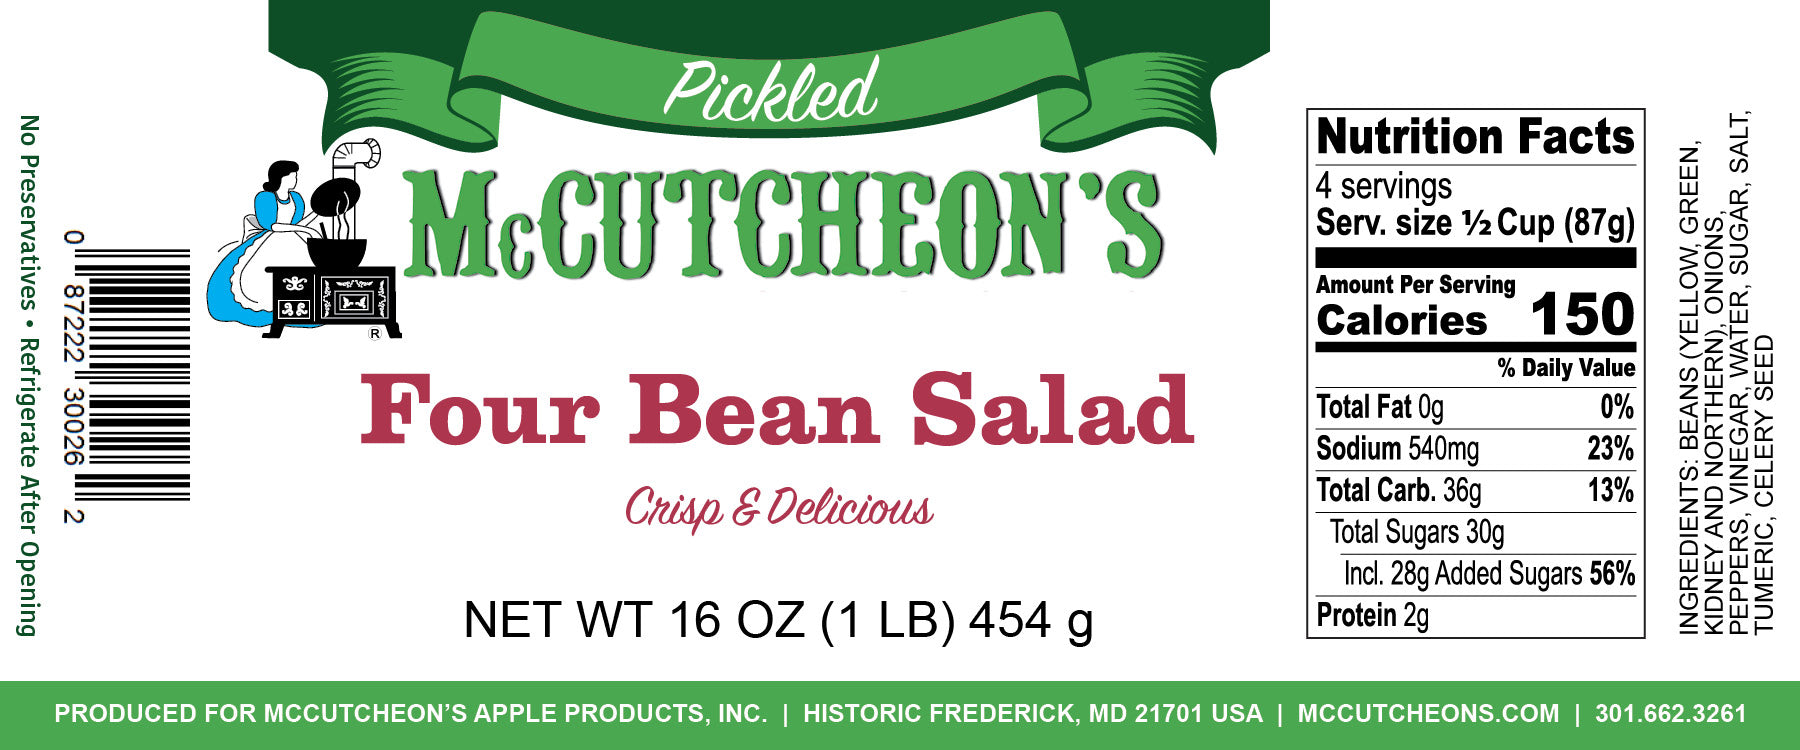 nutrition label for McCutcheon's four bean salad